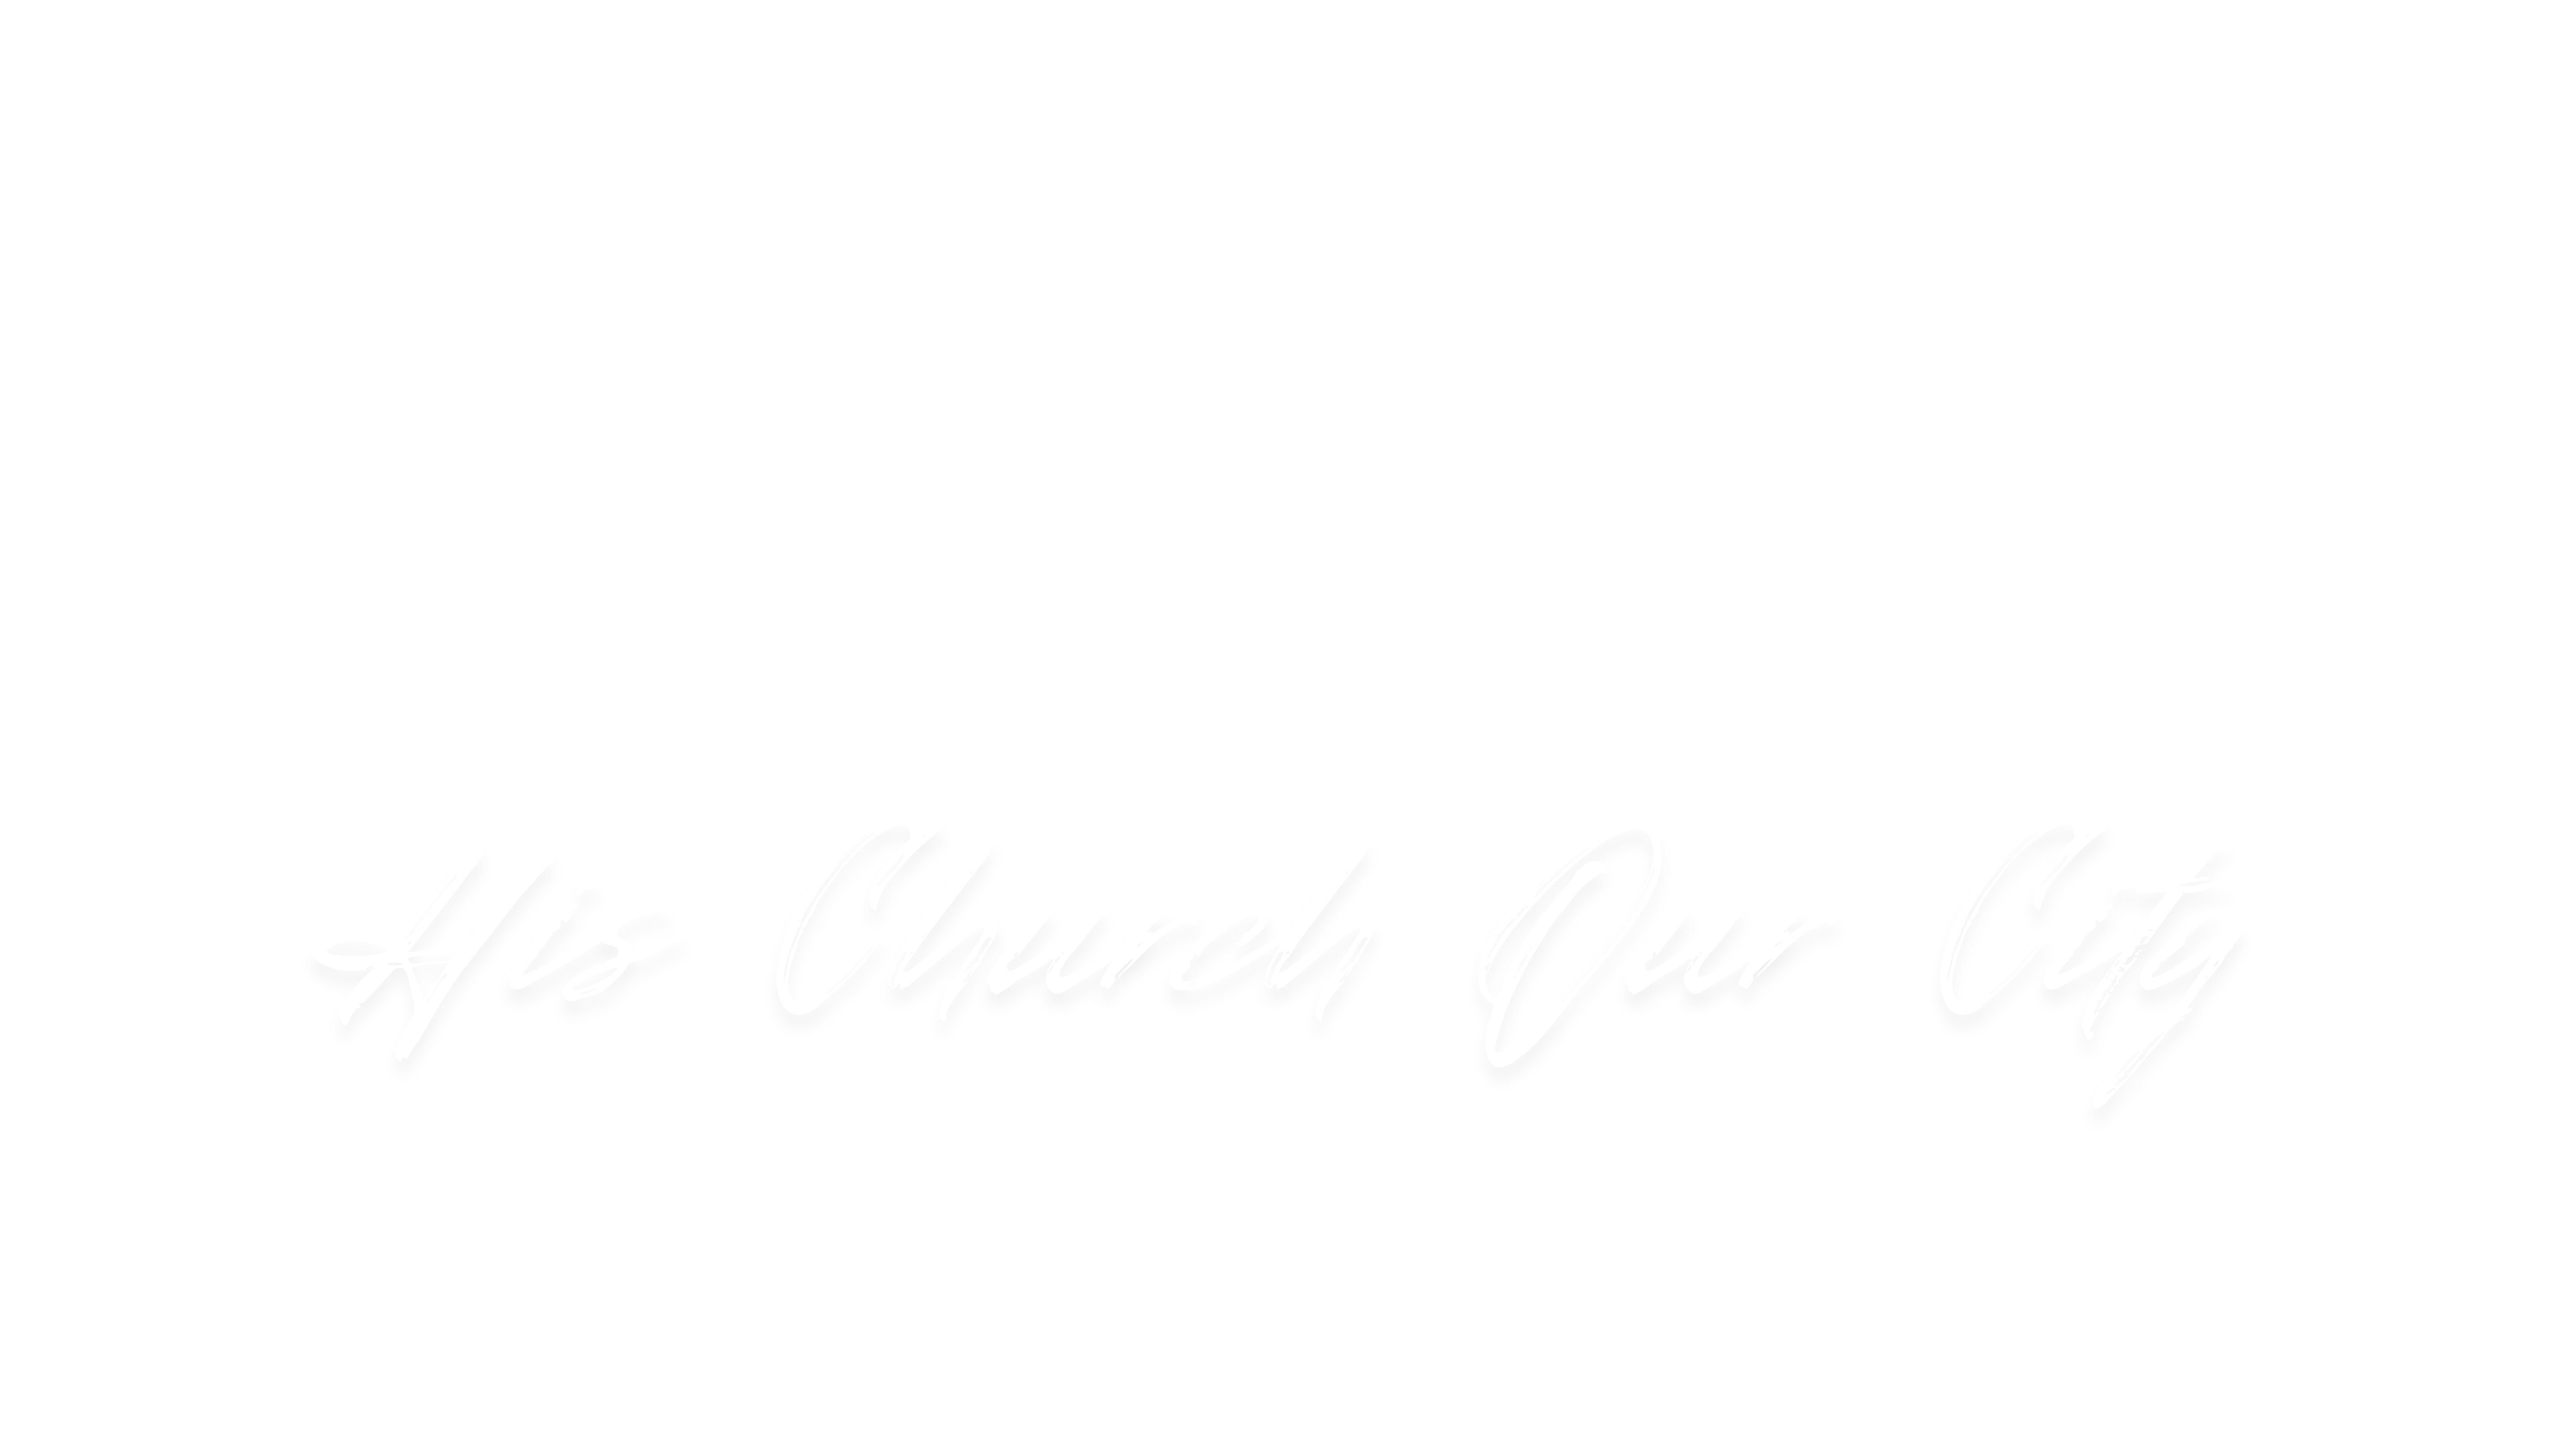 His Church, Our City Navbar Logo